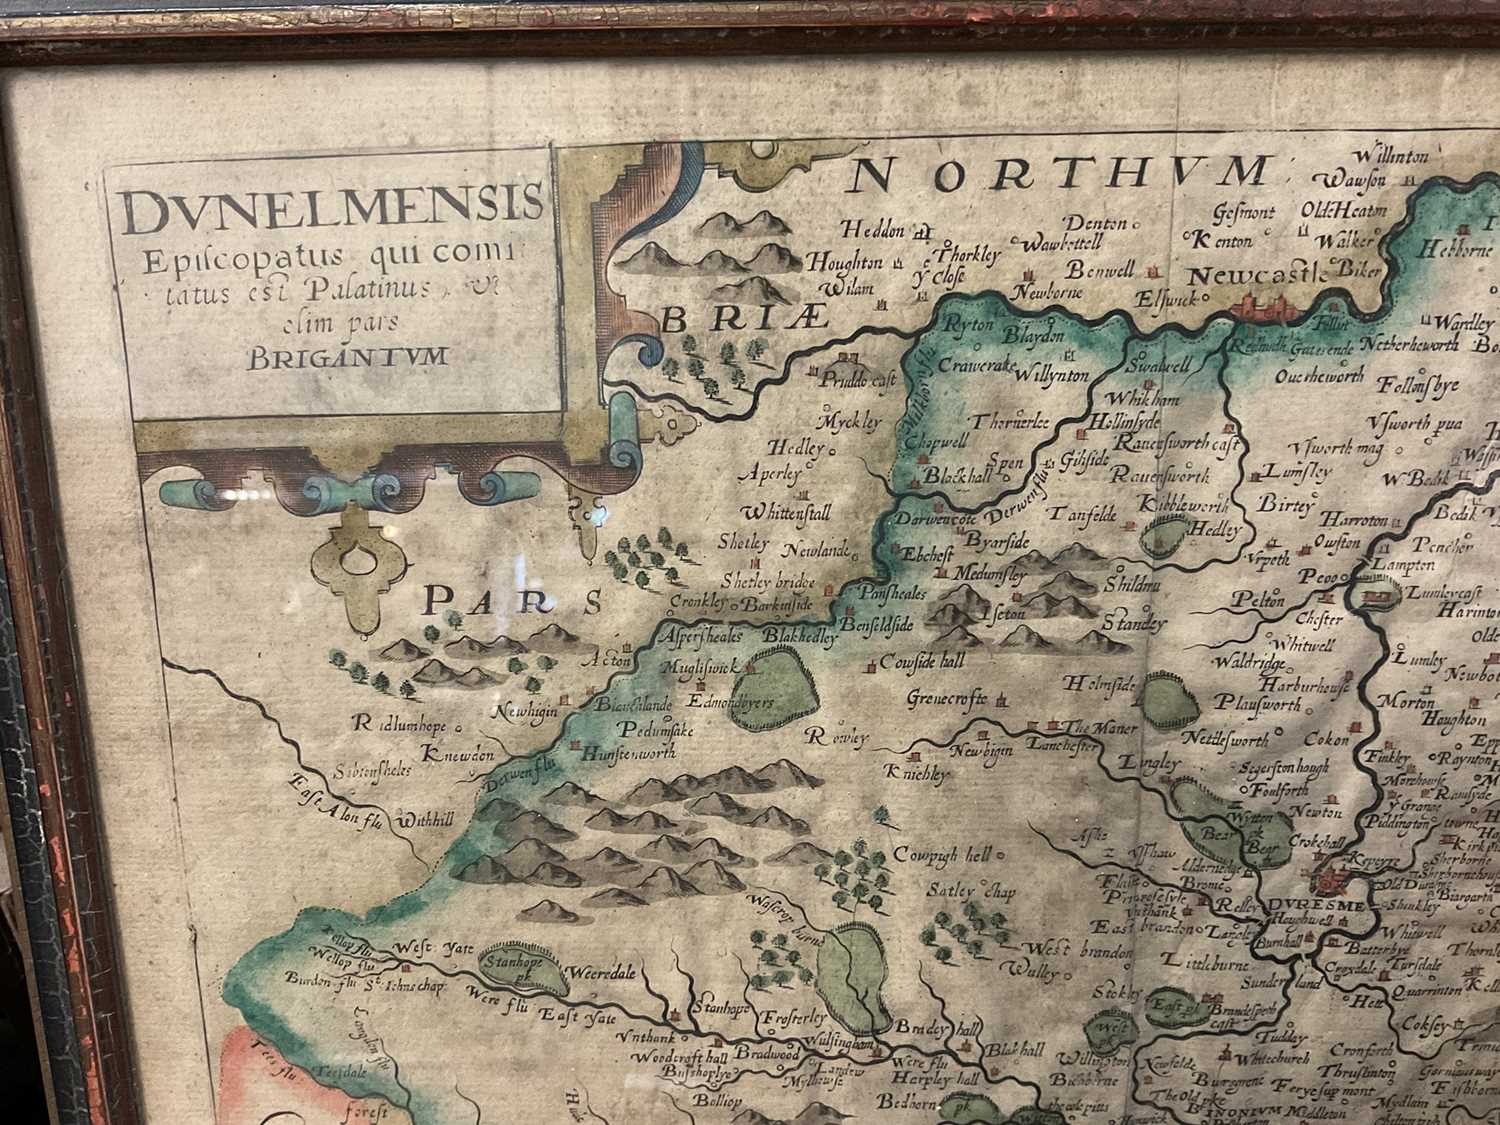 Saxton - Kipp, hand coloured engraved map - Dunelmensis, map of Durham, glazed frame - Image 2 of 4